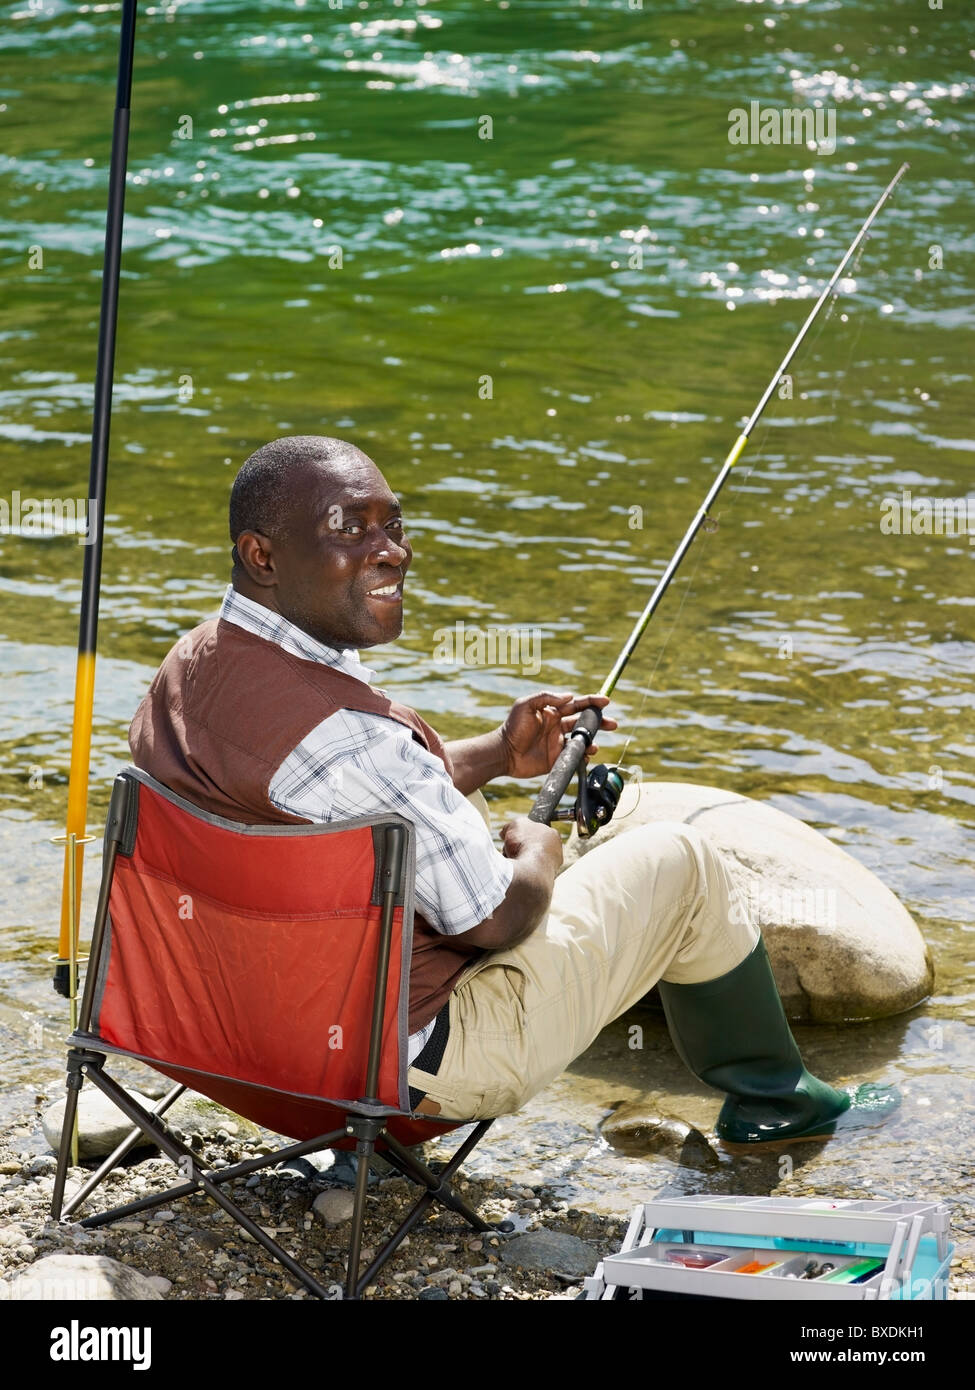 Smiling Black man fishing in stream Stock Photo - Alamy